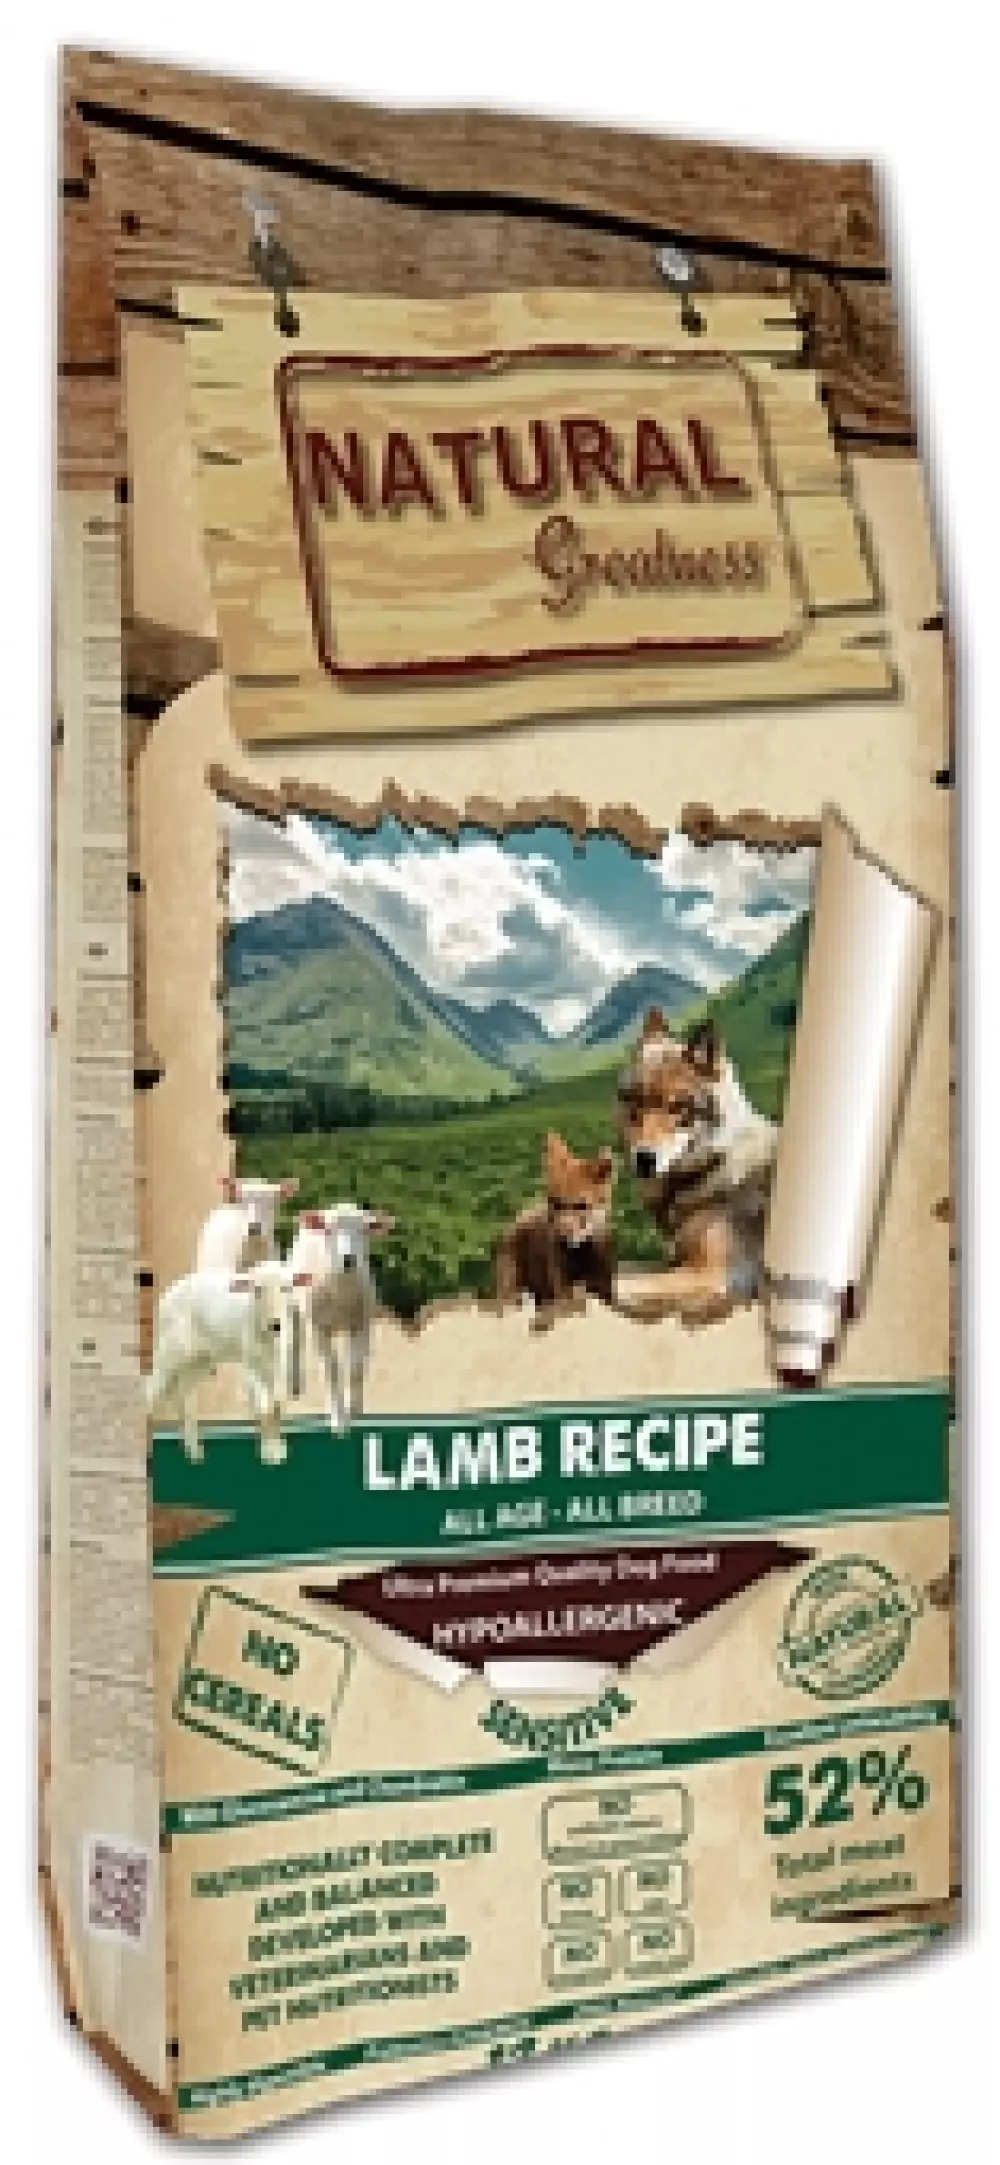 Natural Greatness Lamb Recipe - Sensitive, 2 kg, 8425402400012, Hundemat, Natural Greatness, Arctic Pets AS, Lamb Recipe - Sensitive, Tørrfor, Voksen